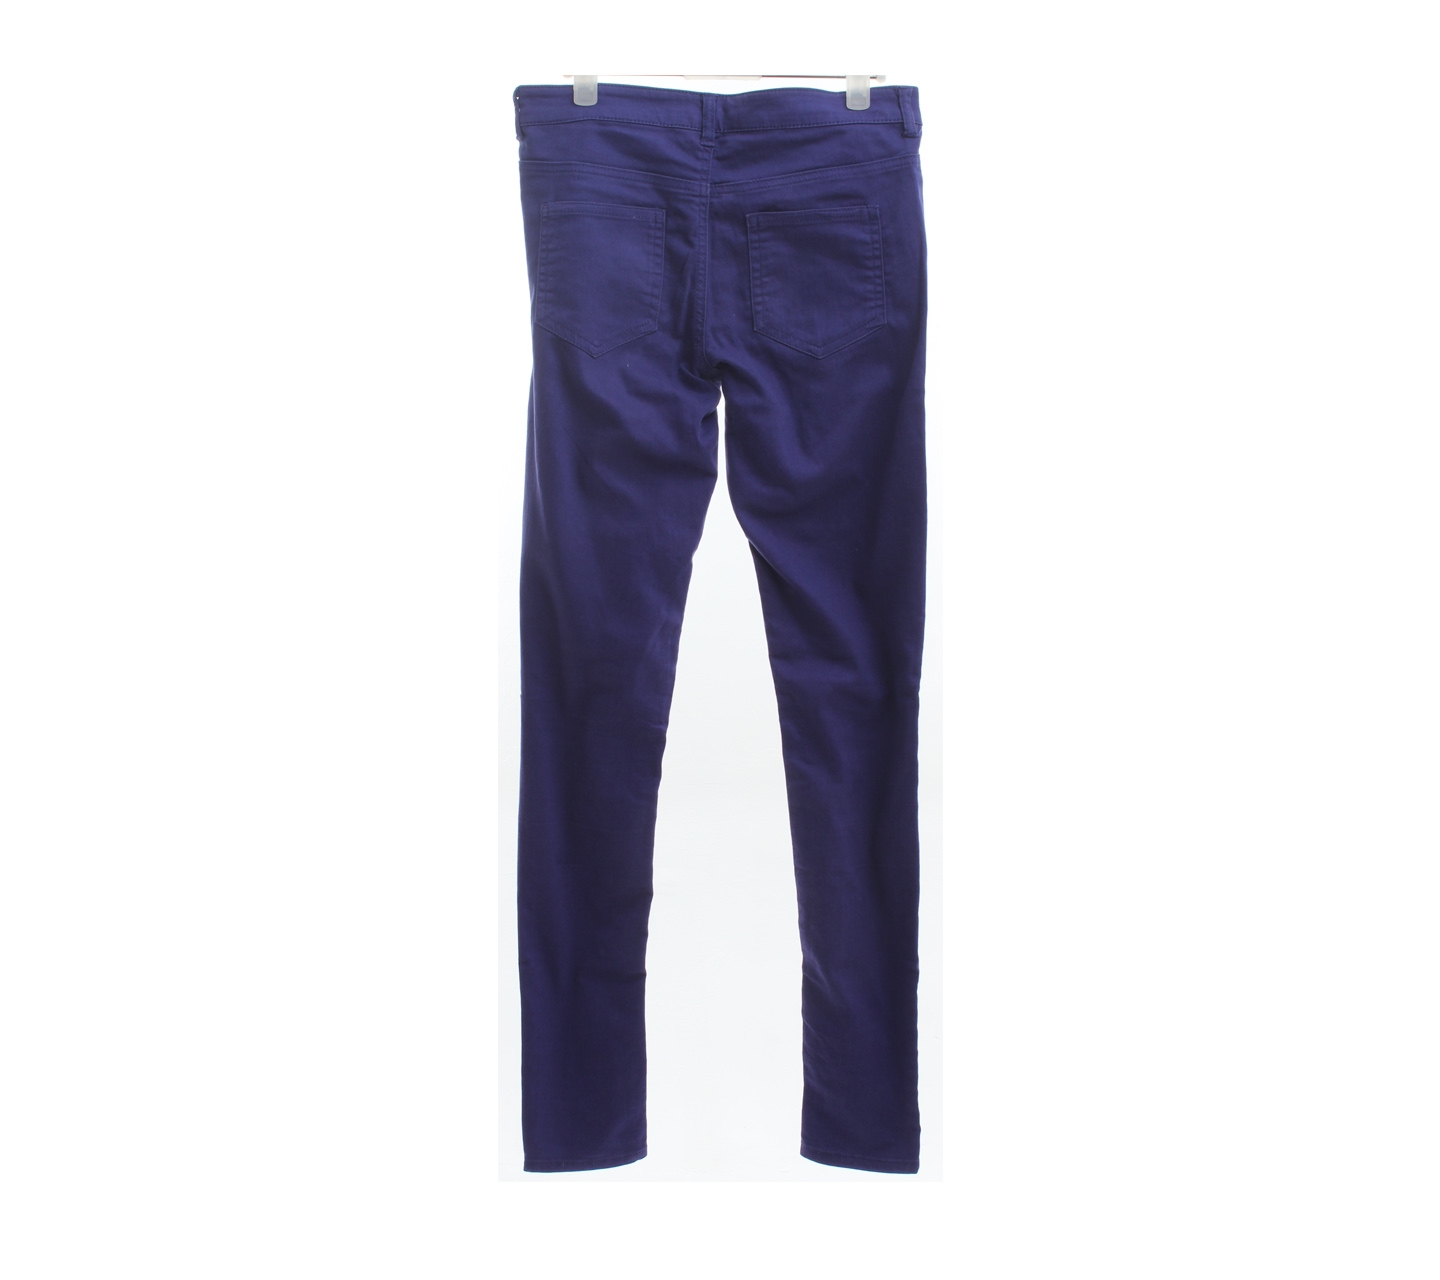 H&M Purple Long Pants